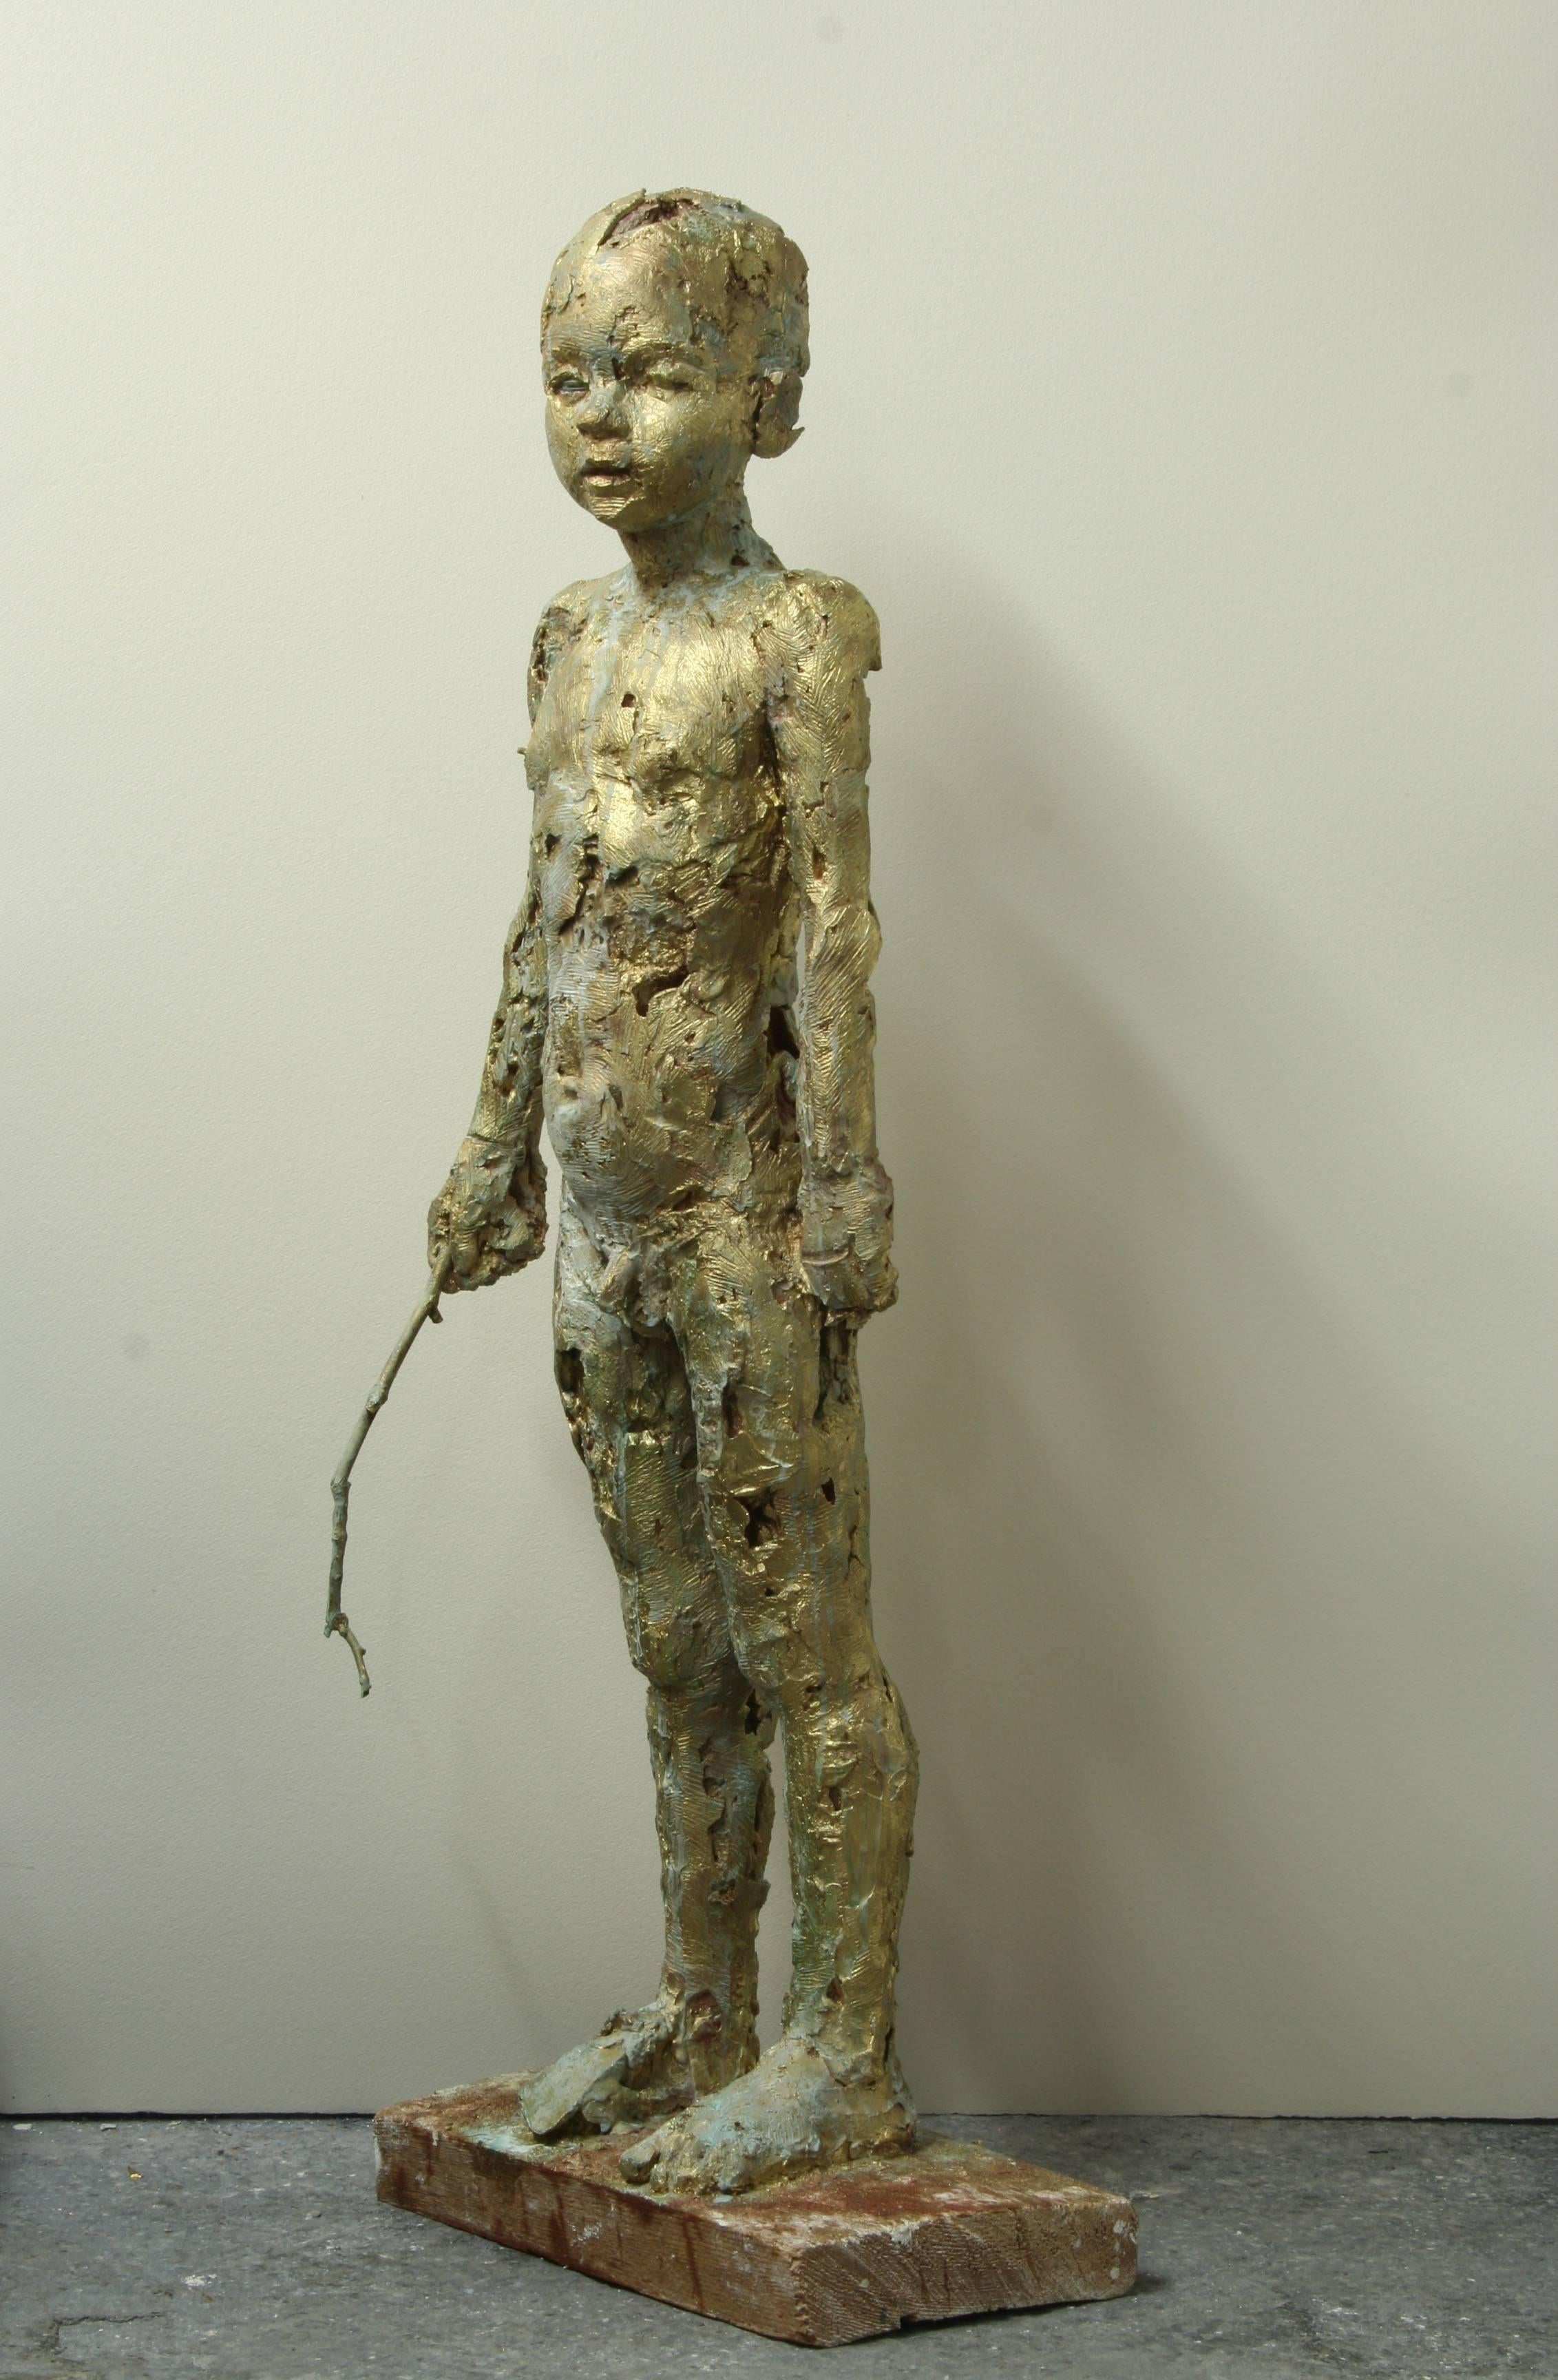 Changeling - Brown Figurative Sculpture by Elizabeth Allison